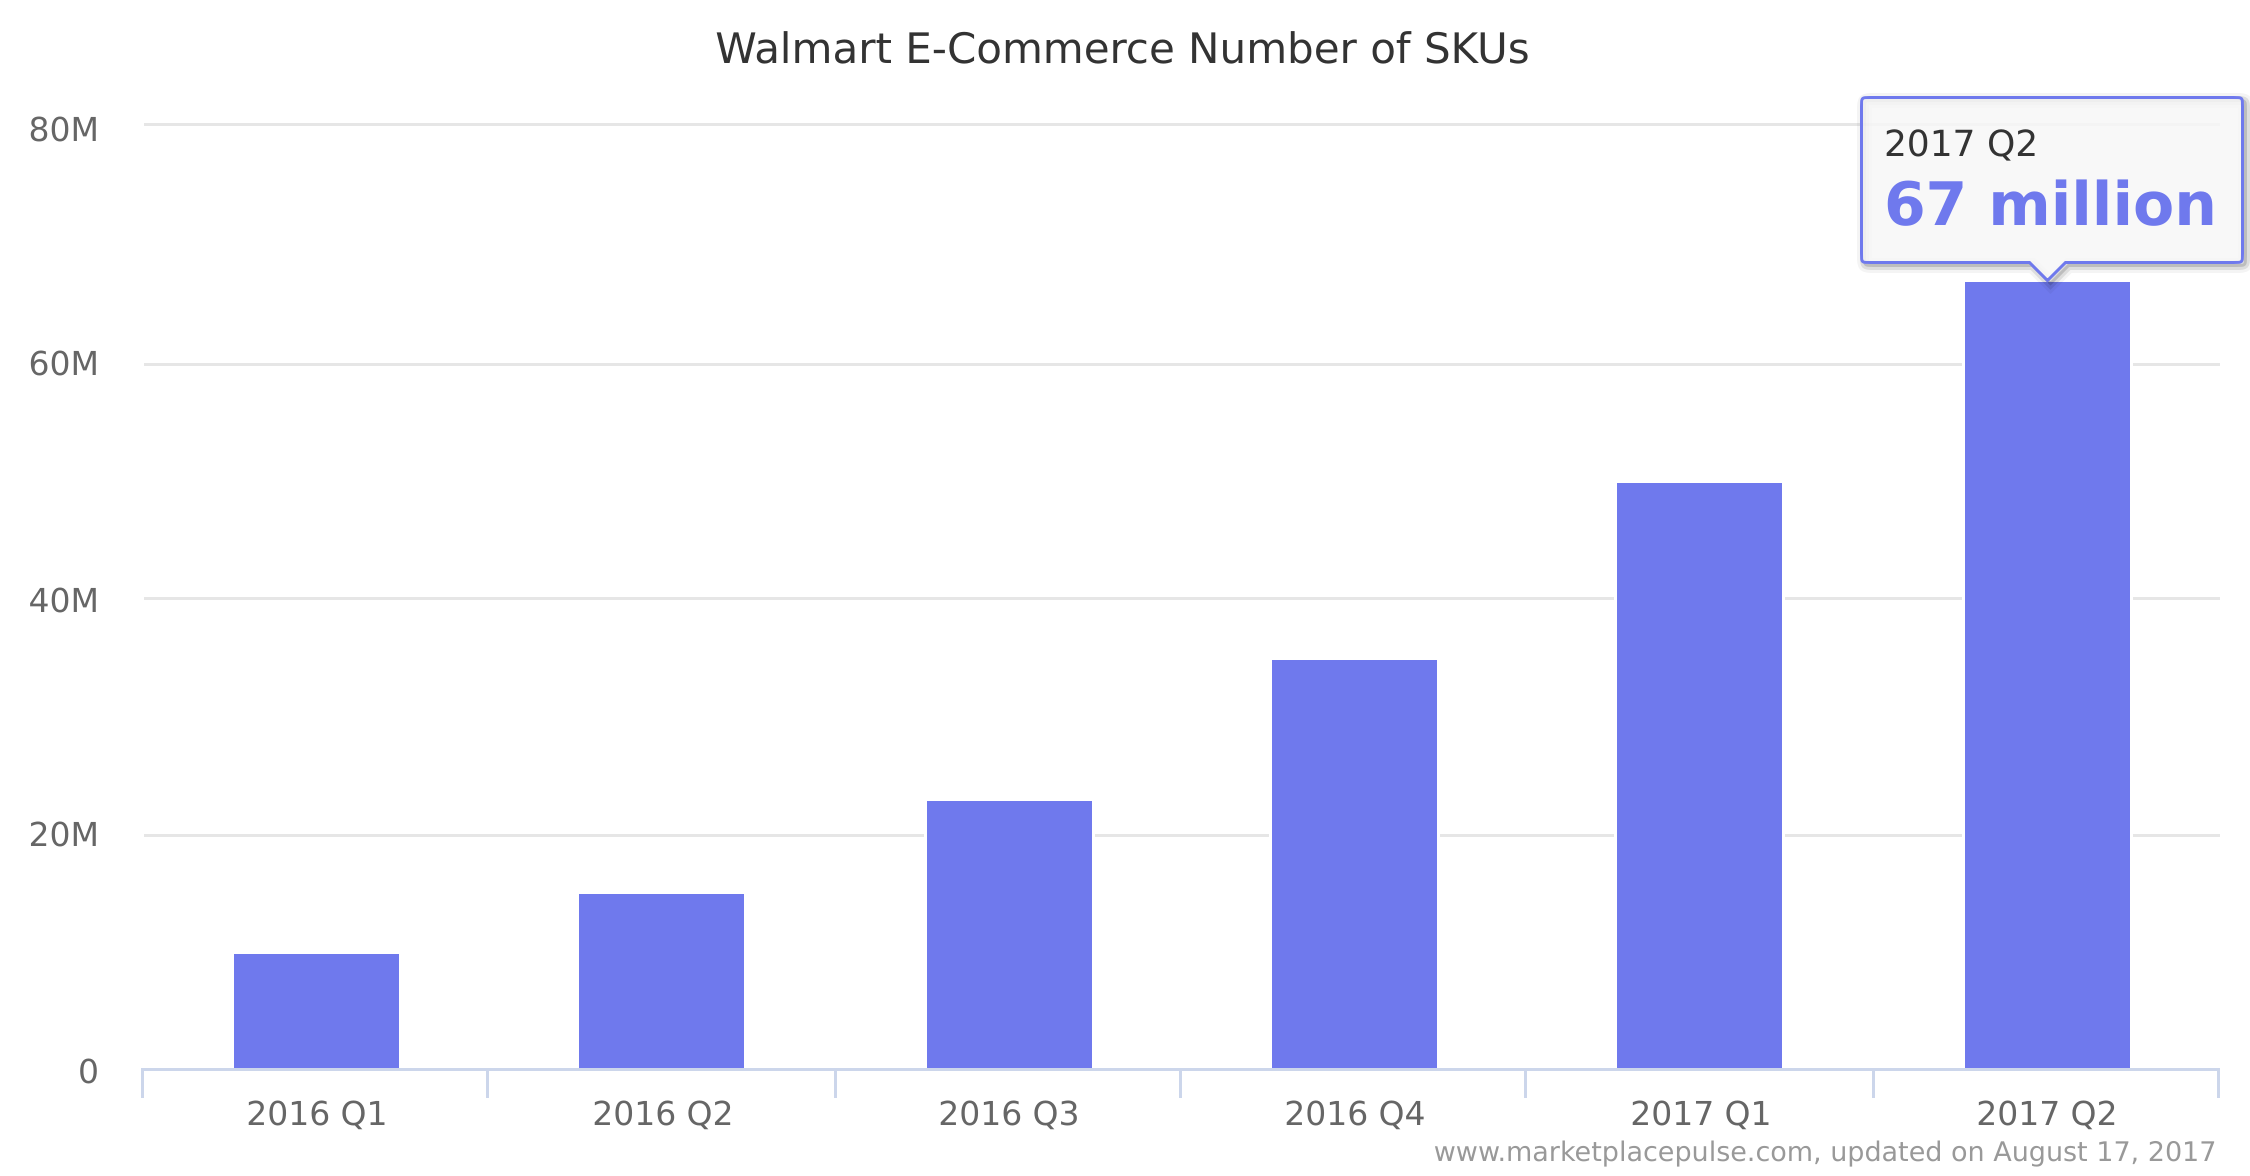 Walmart E-Commerce Number of SKUs